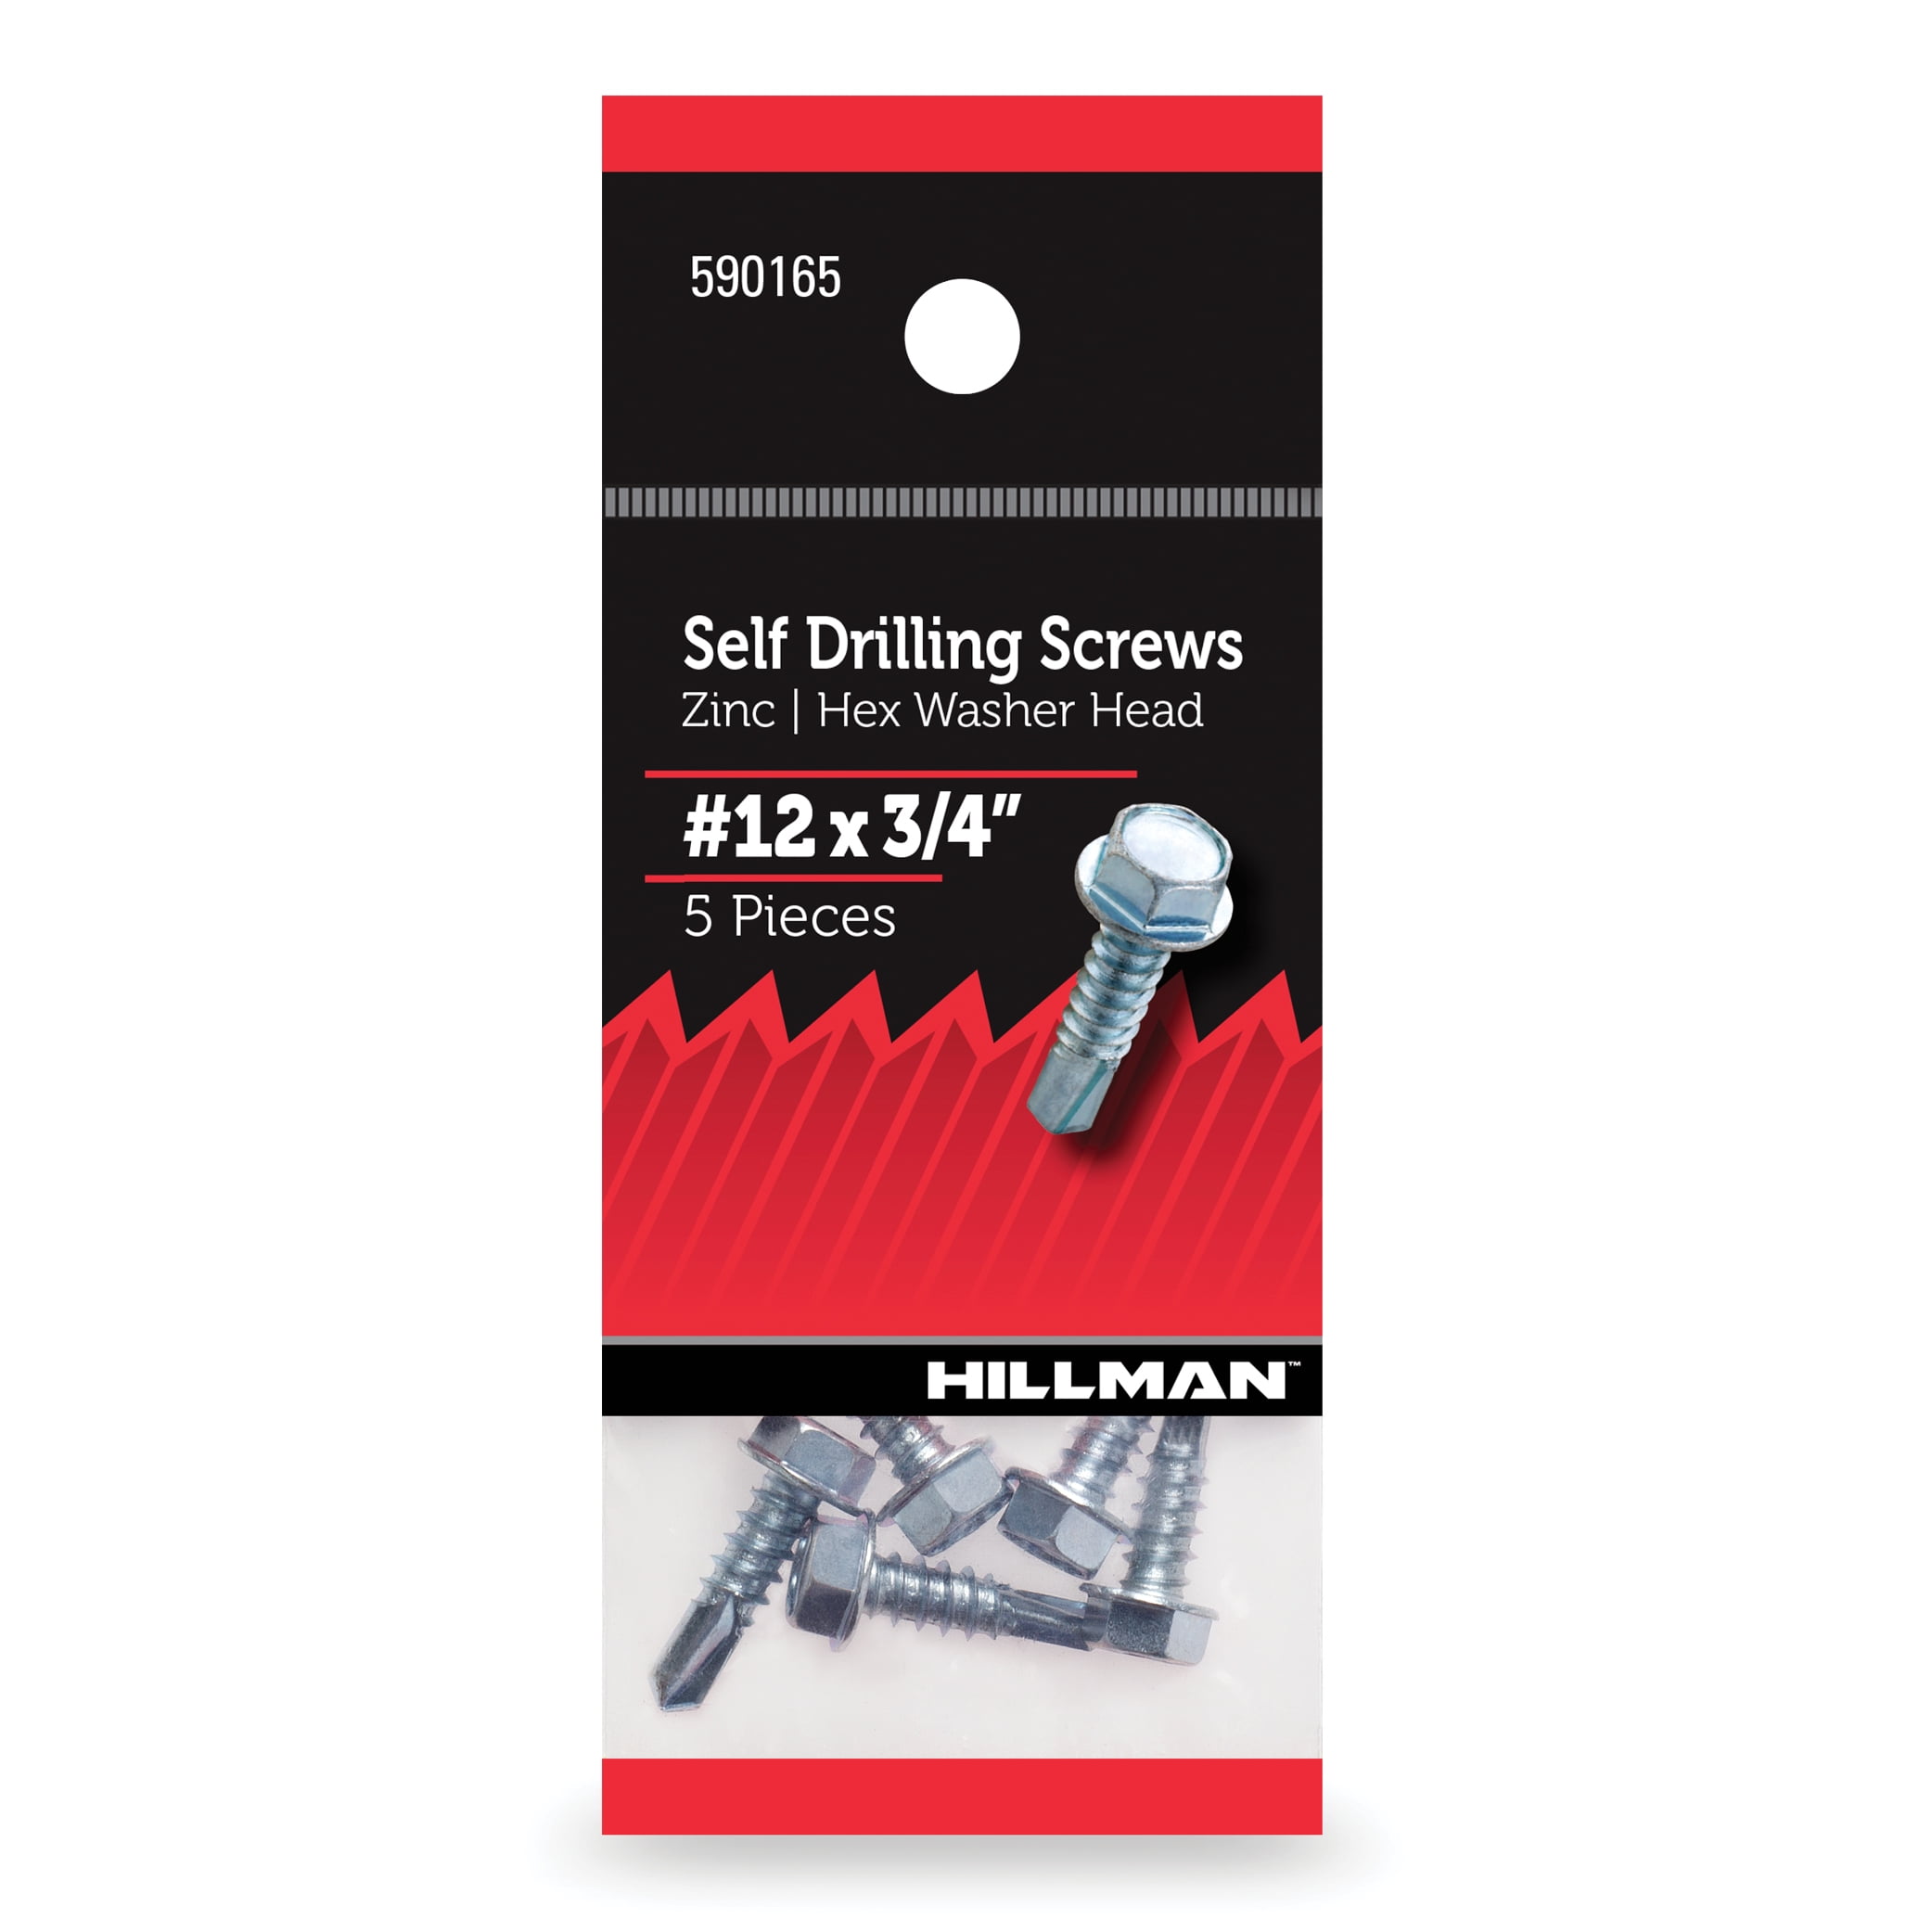 Hillman Self Drilling Screws, Hex Washer Head, #12 x 3/4" Zinc Plated, Steel, Pack of 5